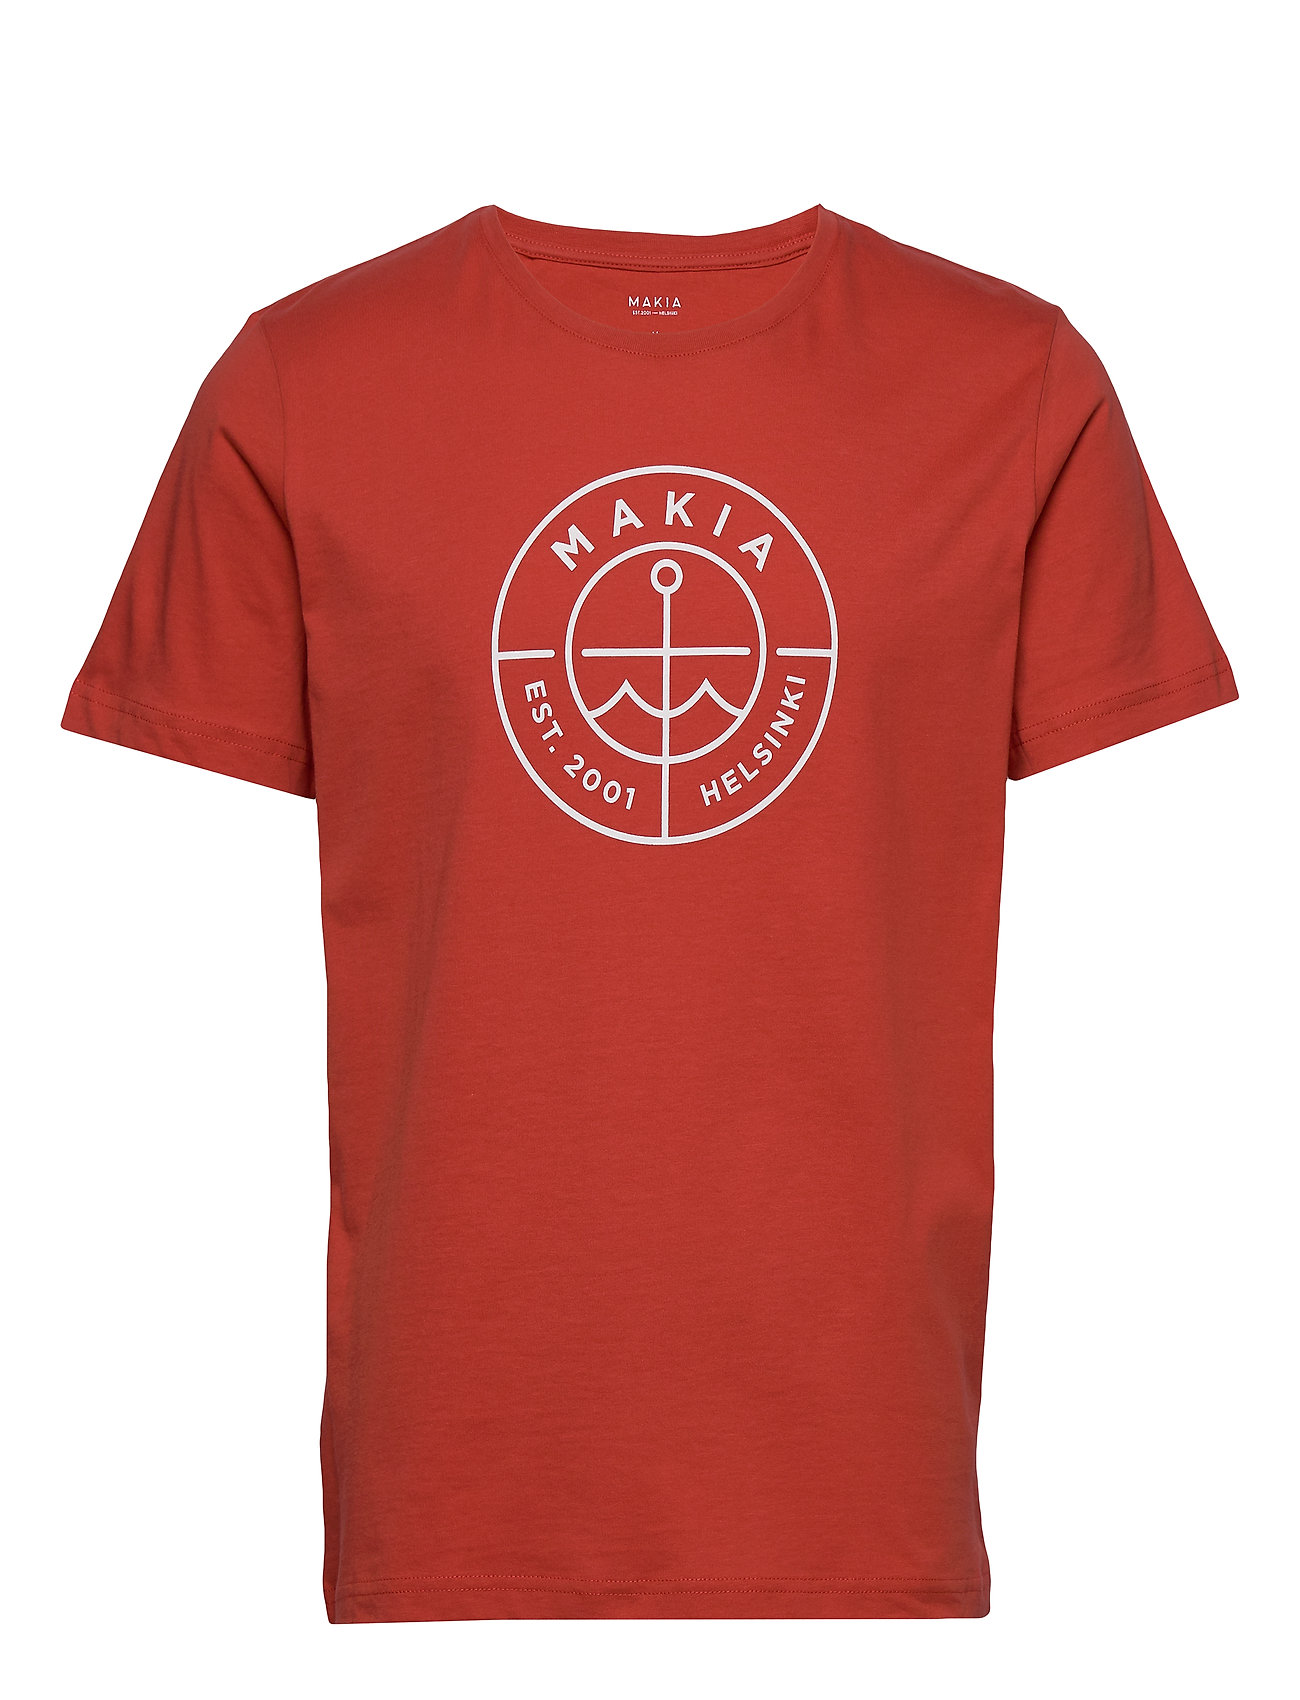 Scope T-Shirt T-shirts Short-sleeved Punainen Makia